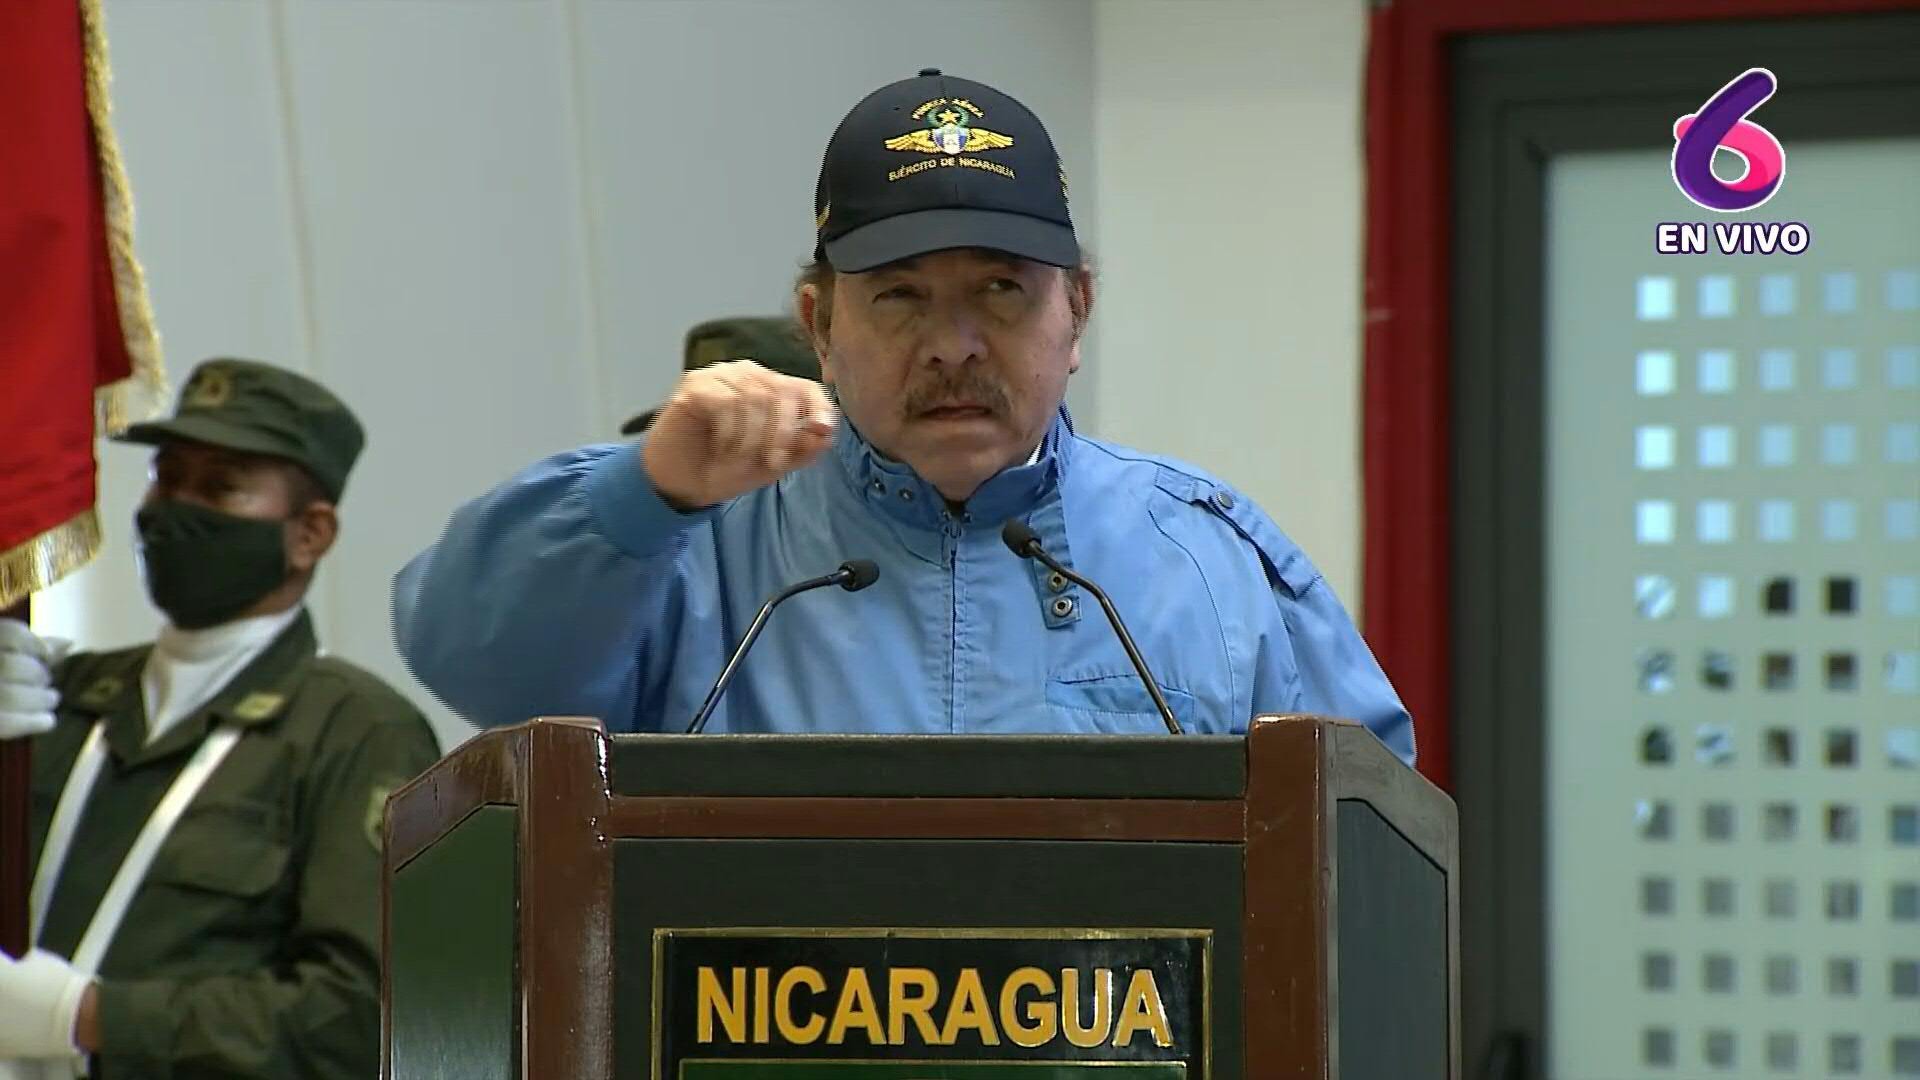 The dictator of Nicaragua, Daniel Ortega, during a speech in Managua